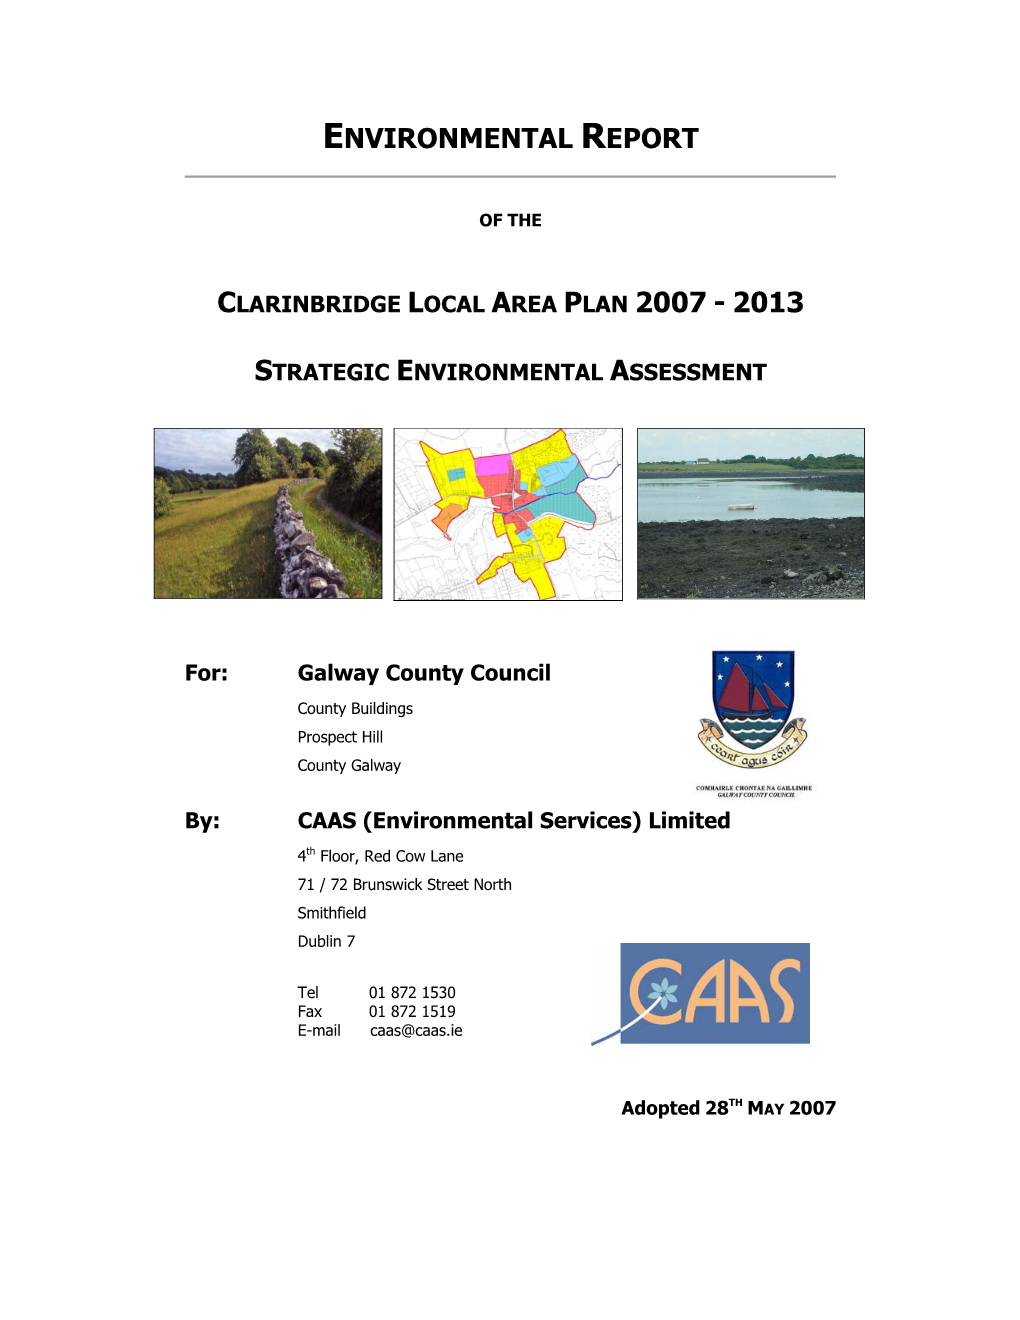 Clarinbridge Environment Report